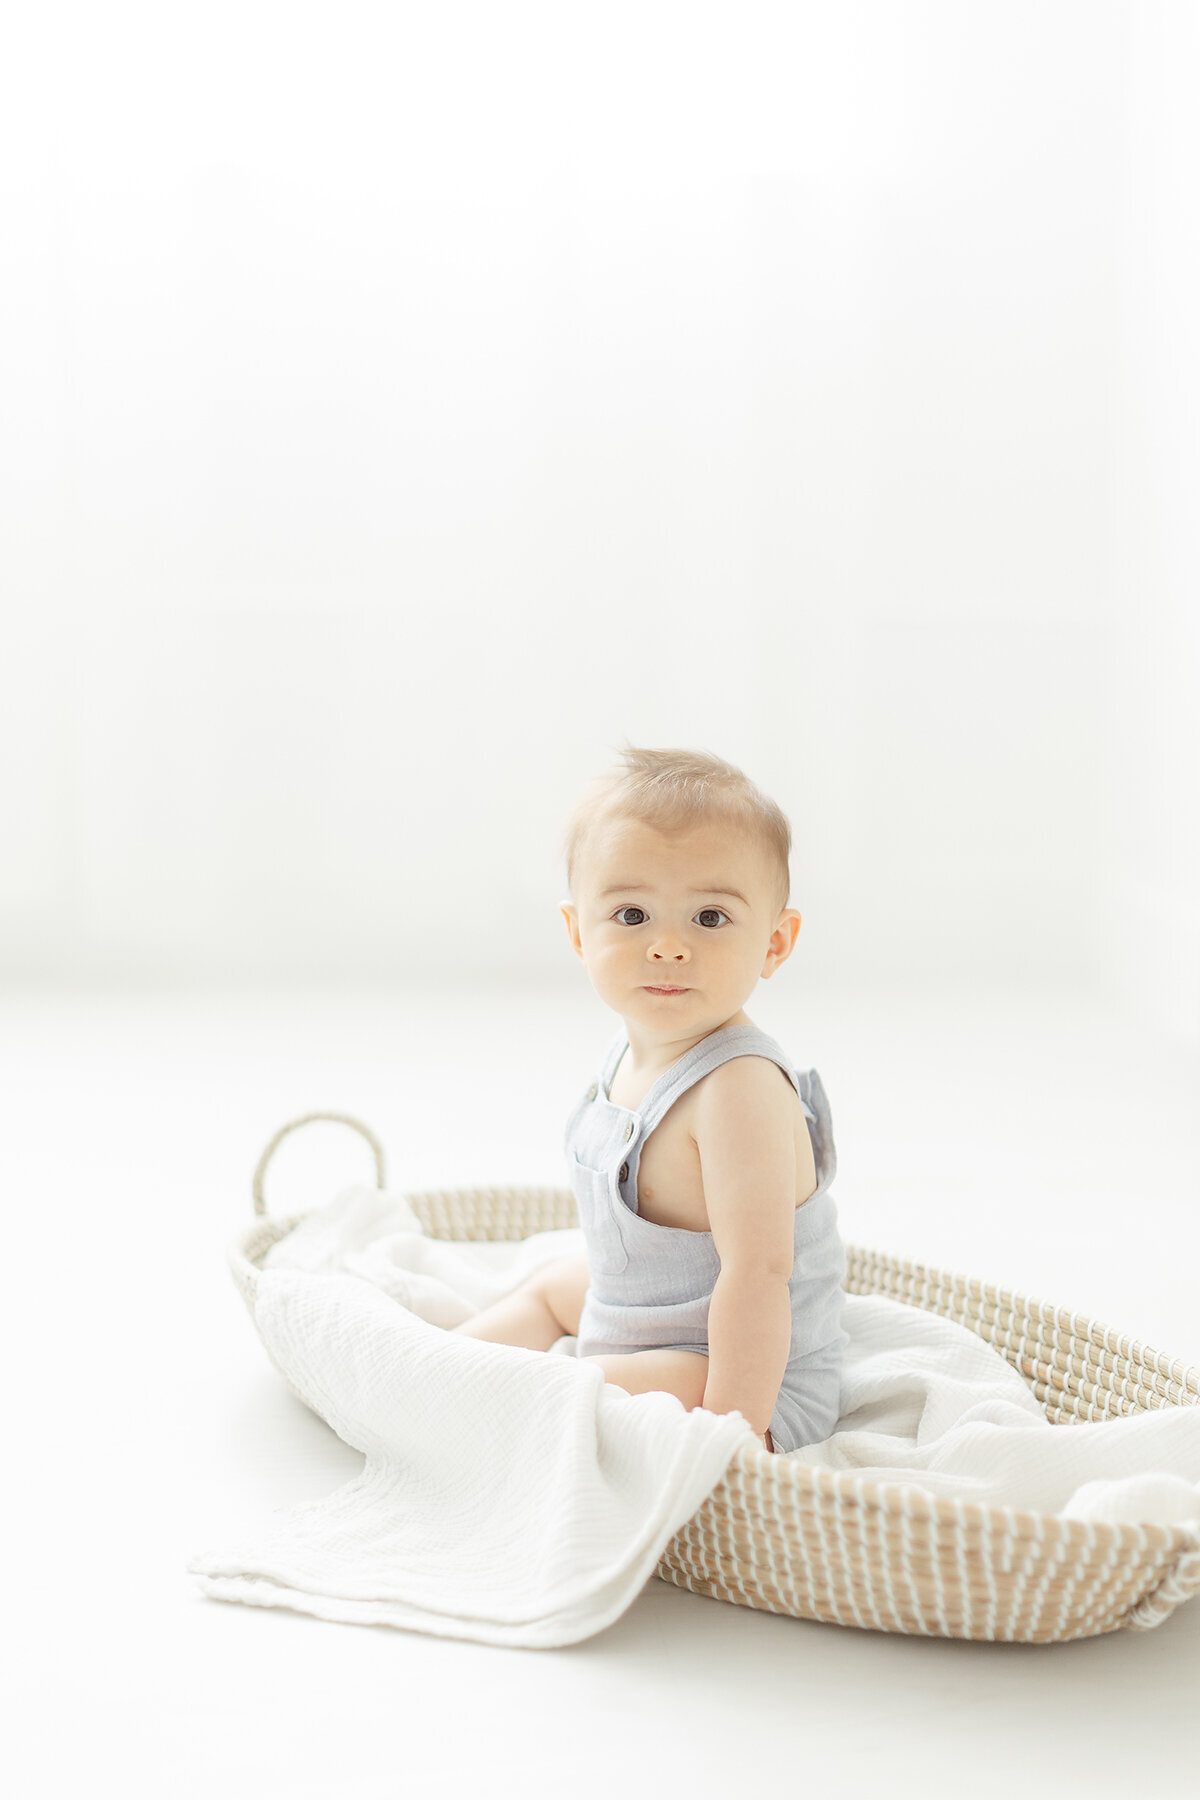 A cute little baby boy sitting in a basket in a photography studio by a window.